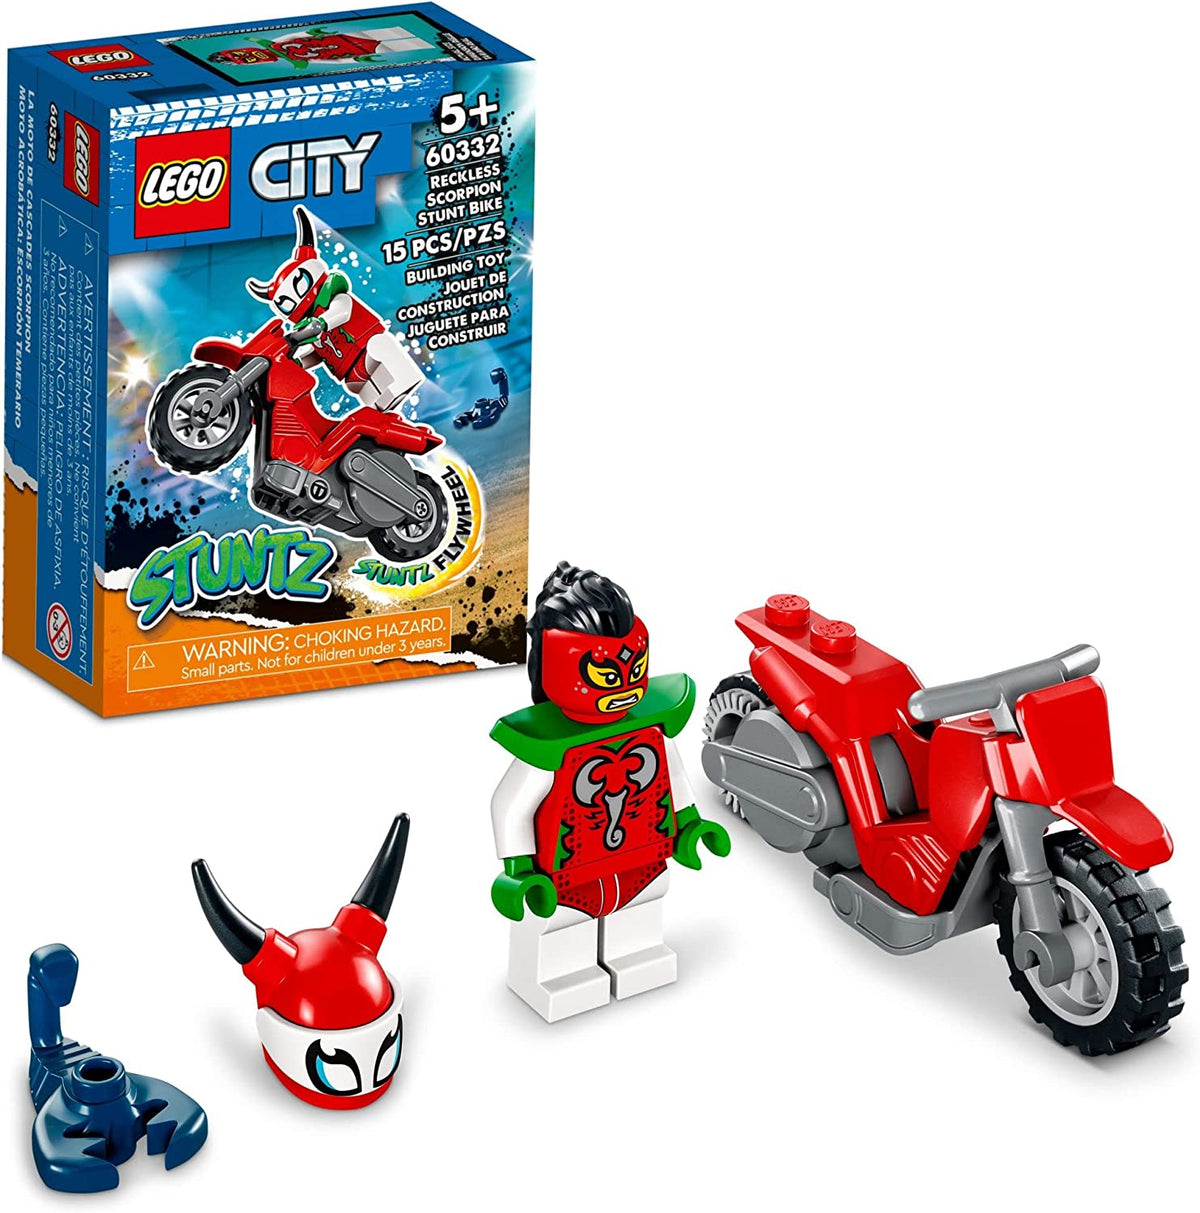 LEGO City Stuntz Reckless Scorpion Stunt Bike Building Kit For Ages 5+